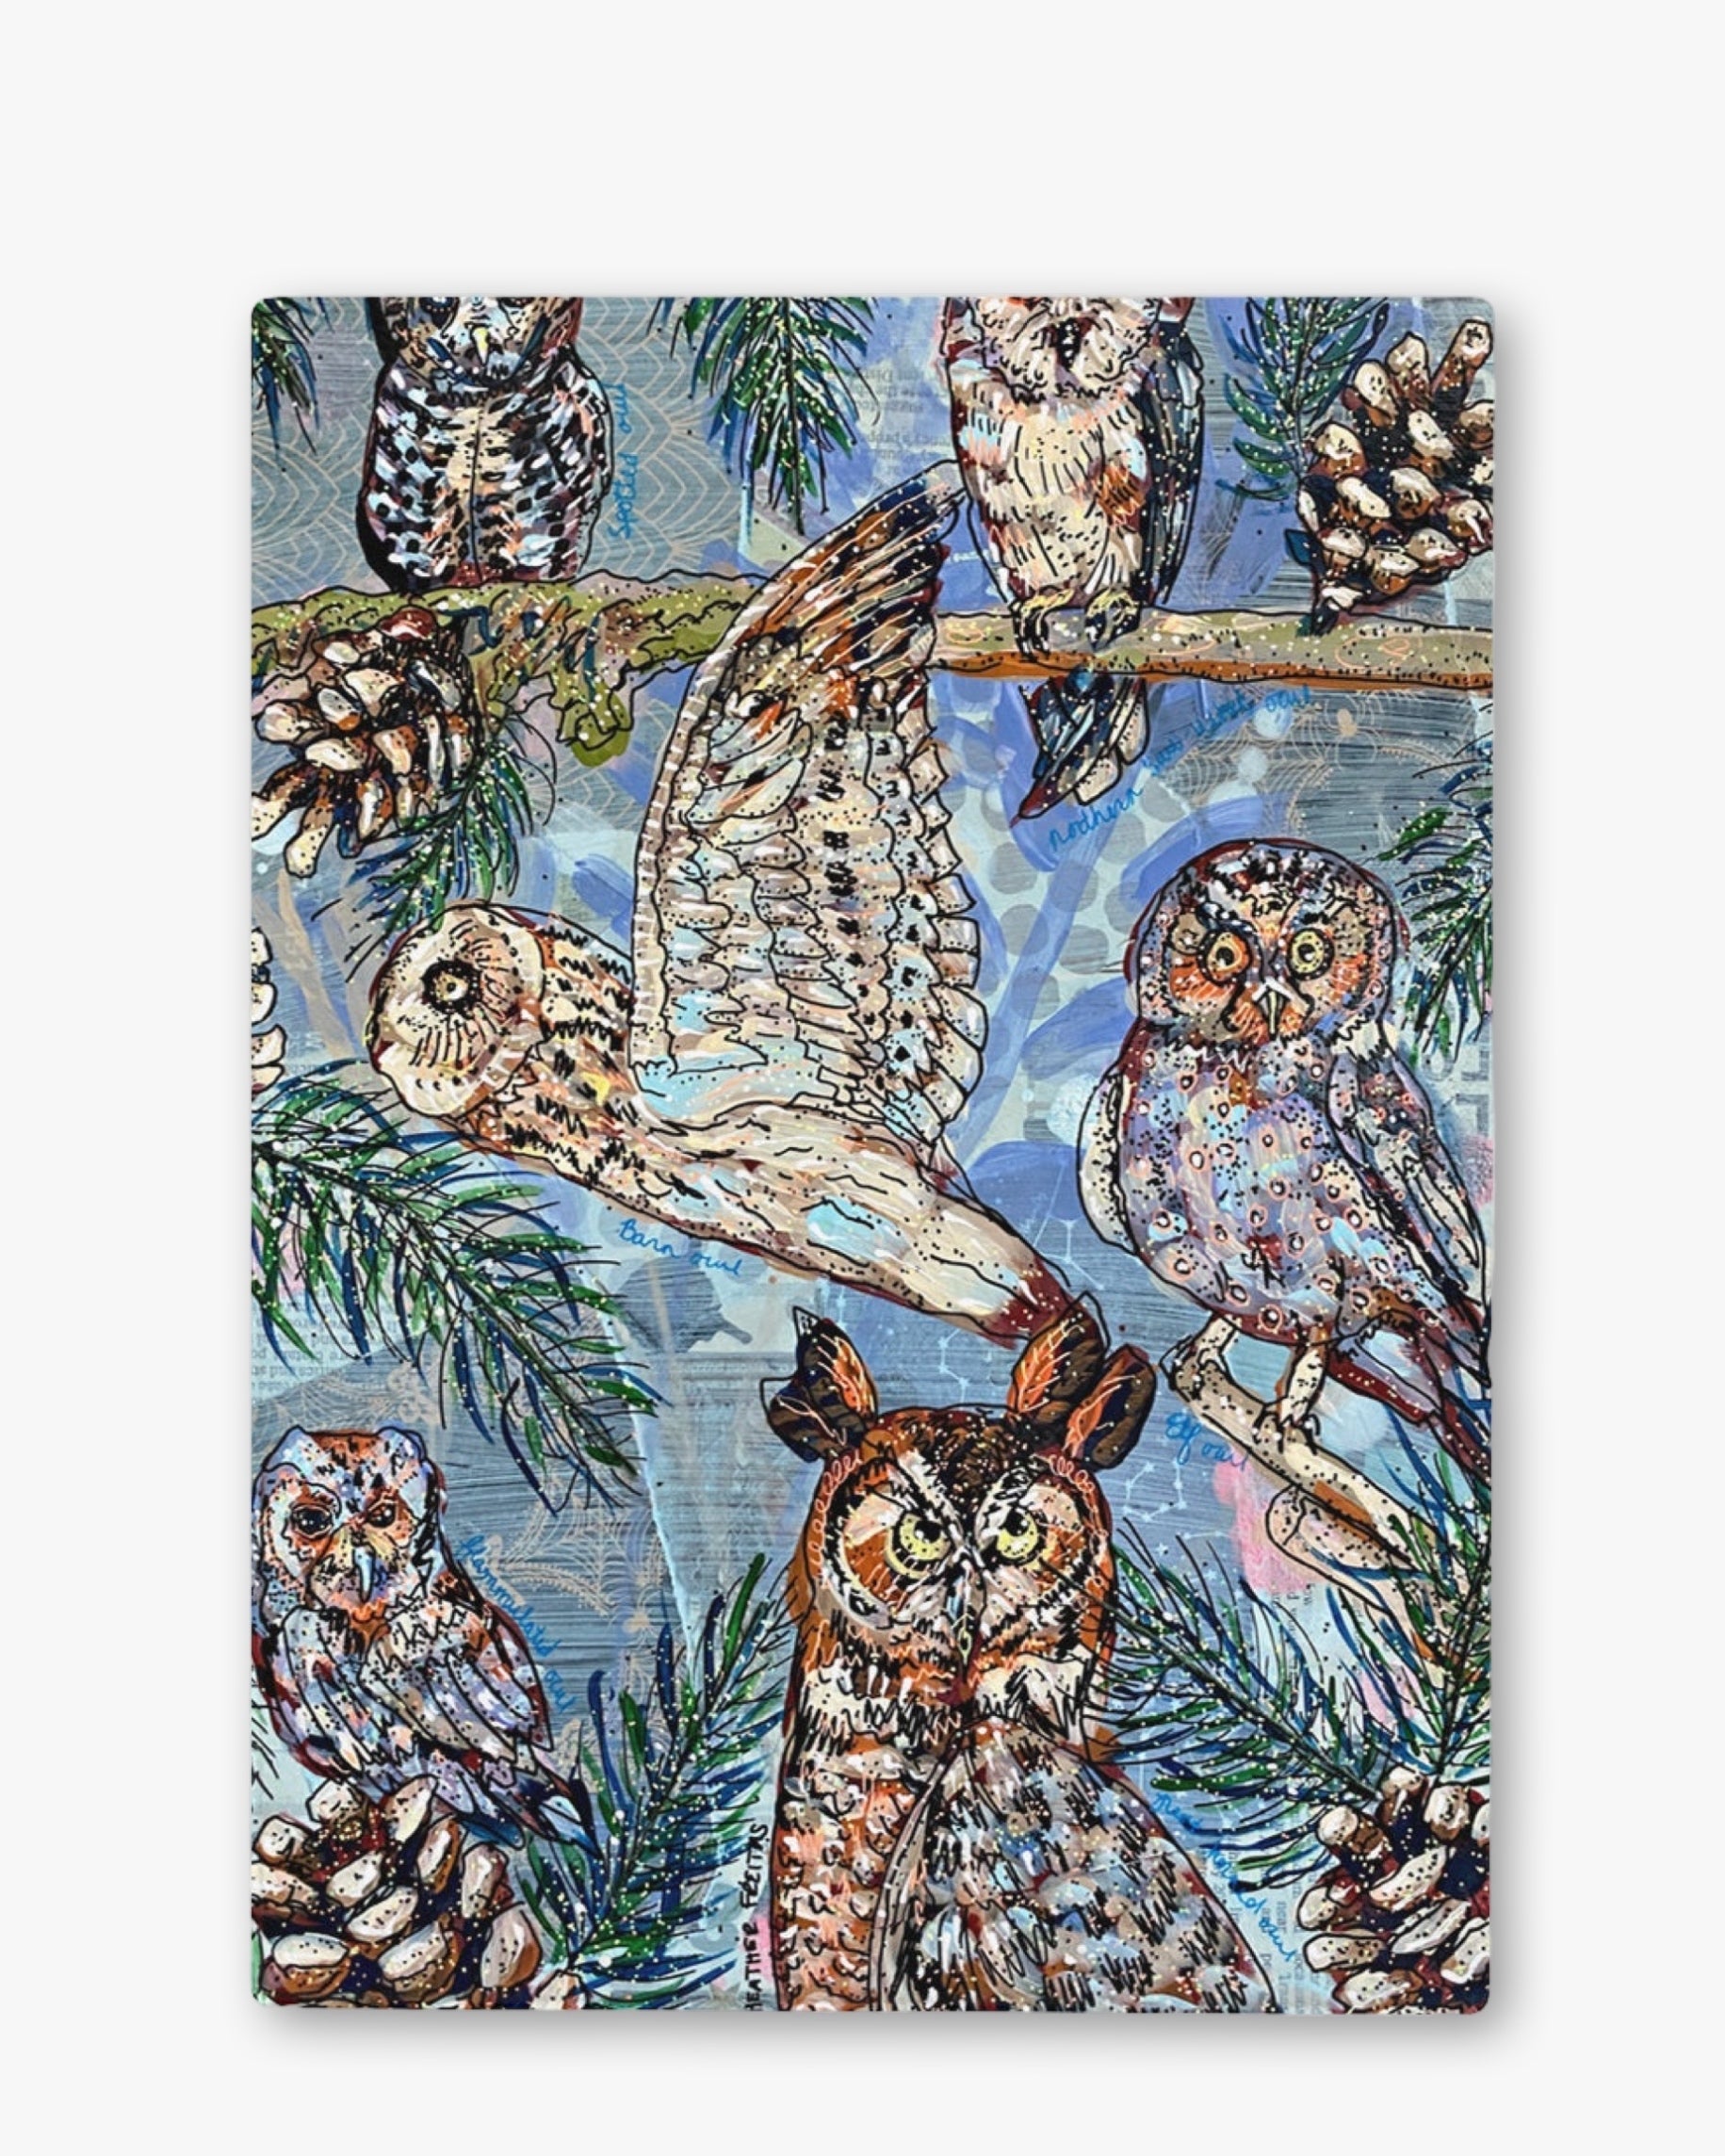 Owls Chinchilla Glass Chopping Board Trivet